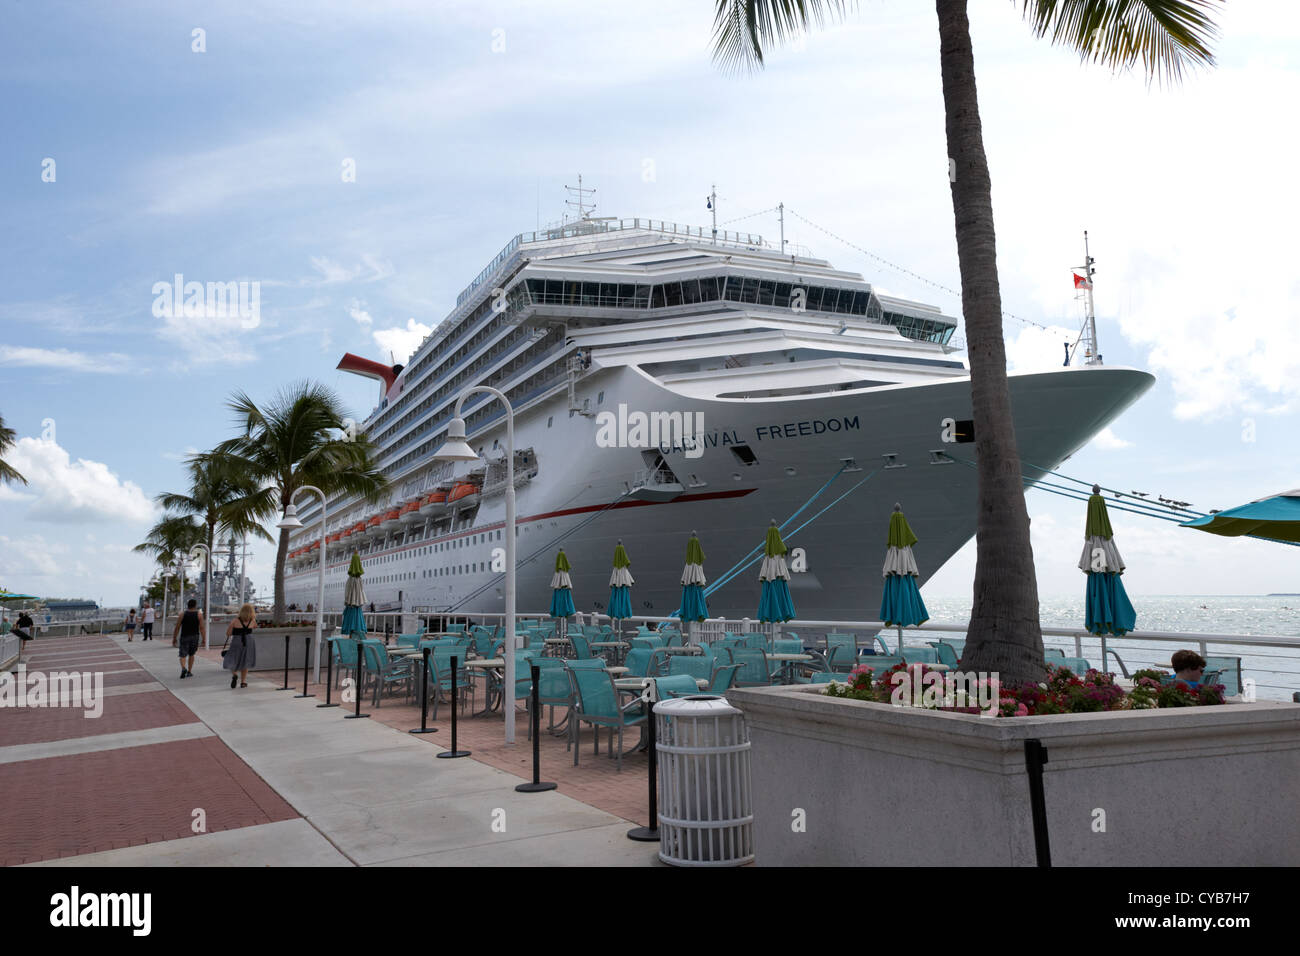 carnival freedom cruise ship moored off mallory square key west florida usa Stock Photo